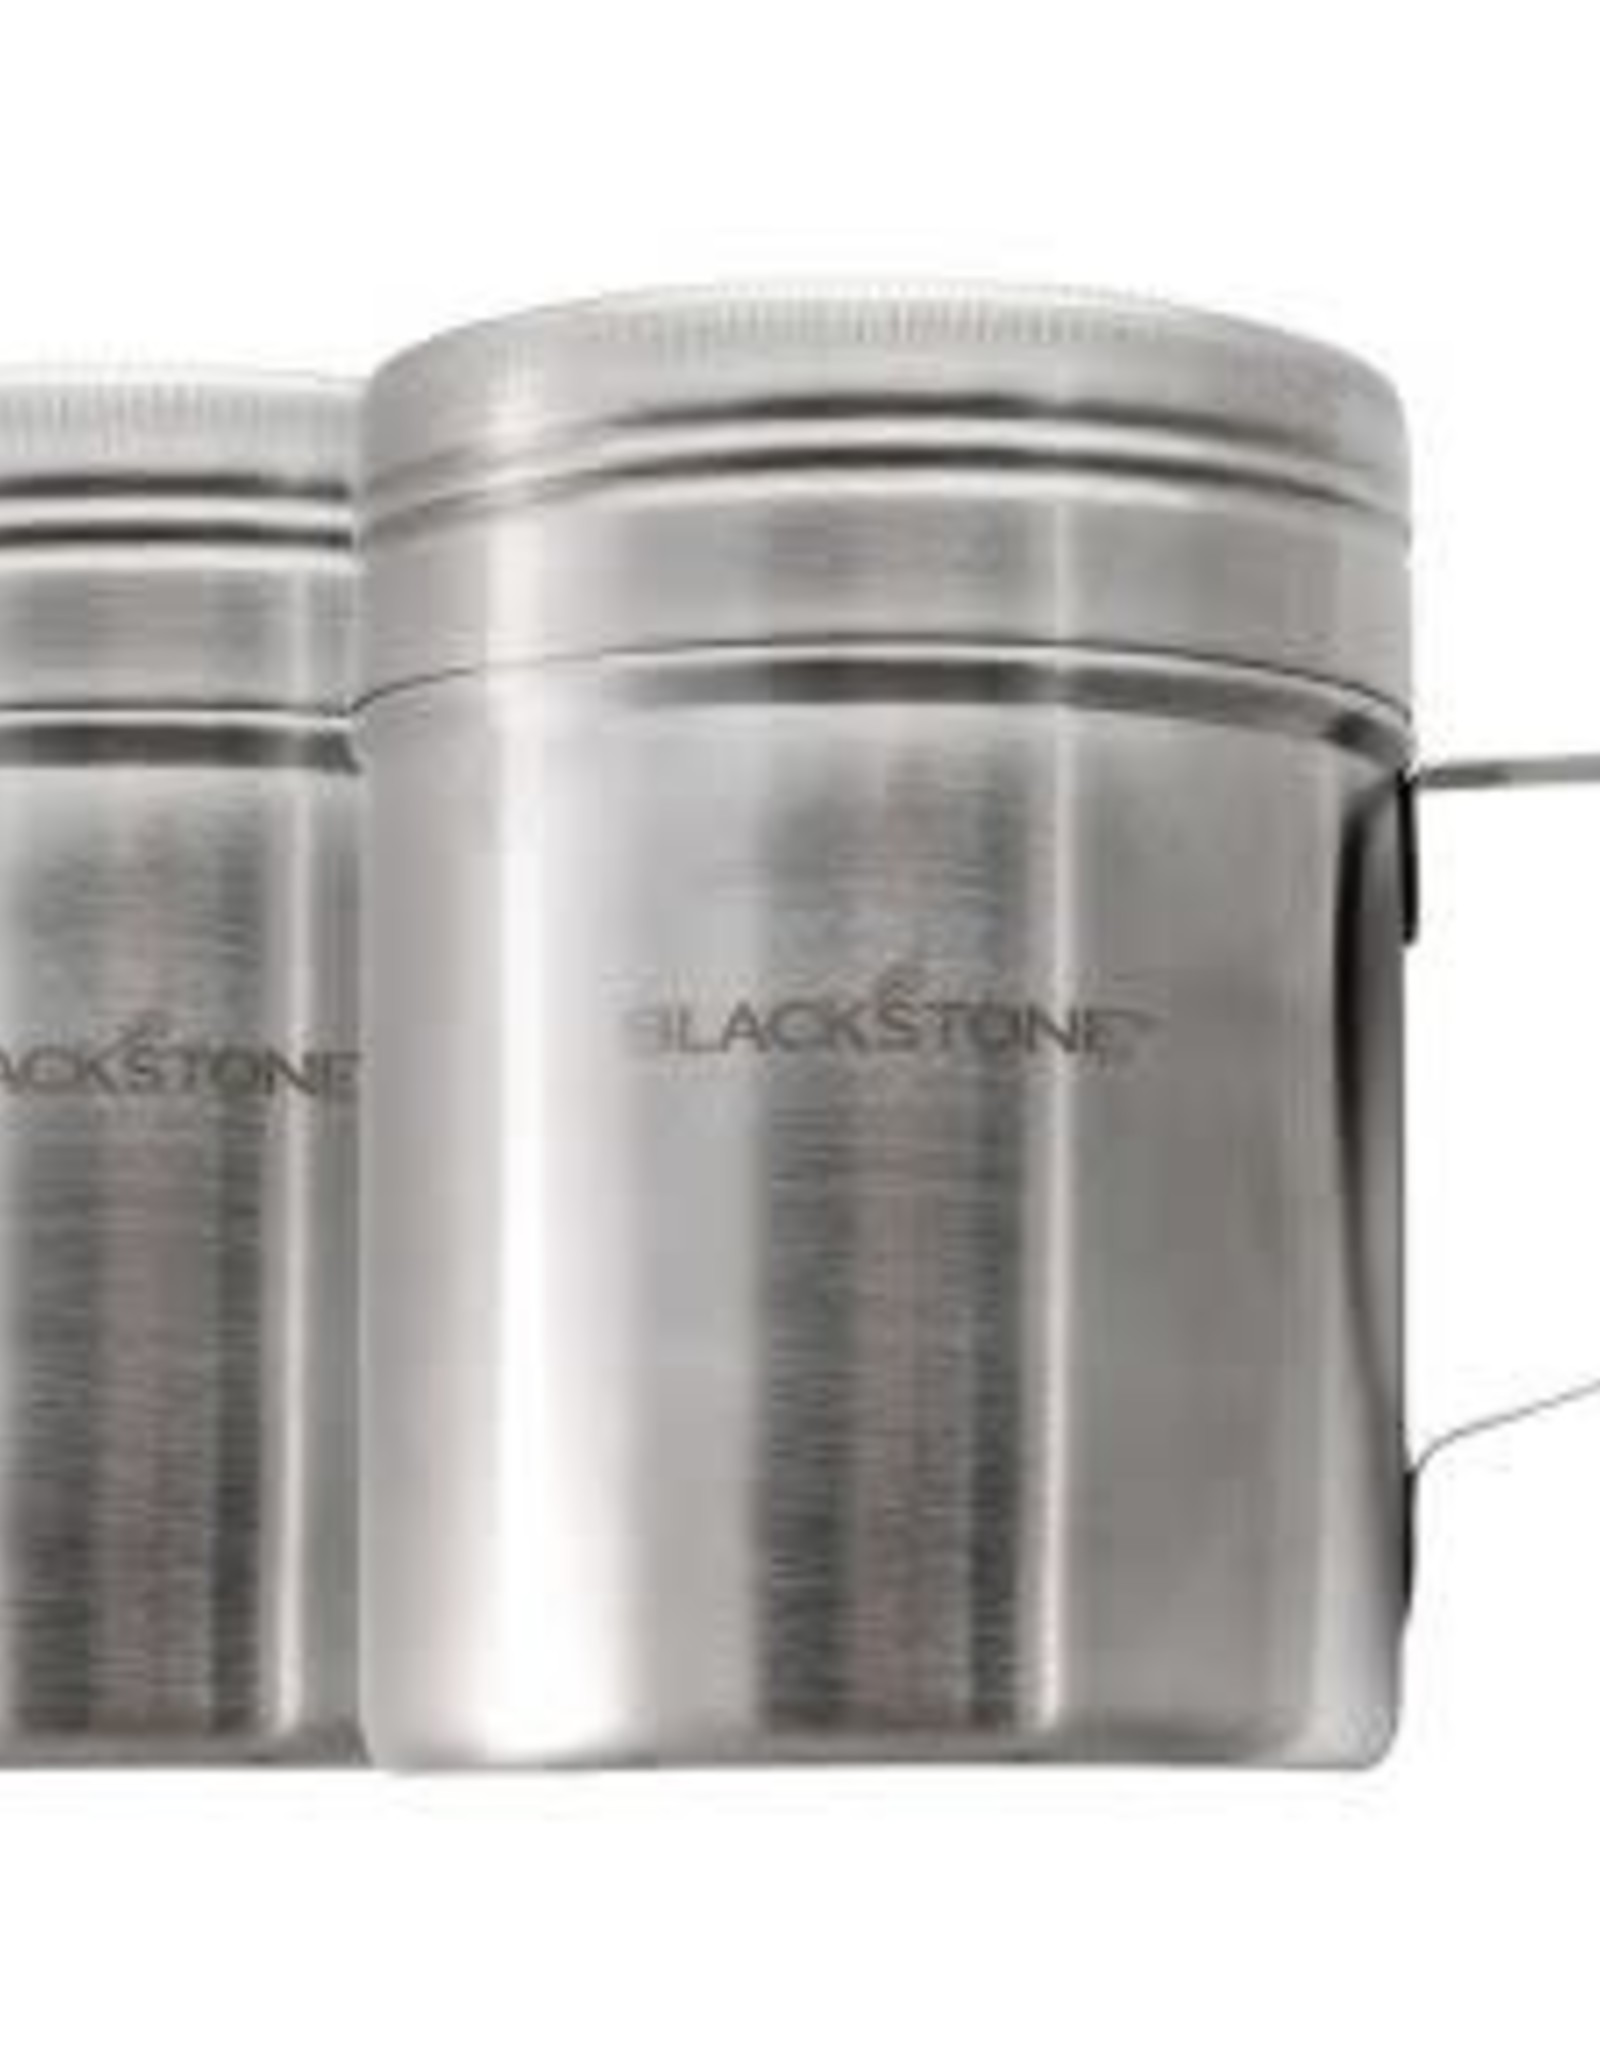 Blackstone Blackstone Cooking Dredges 5072